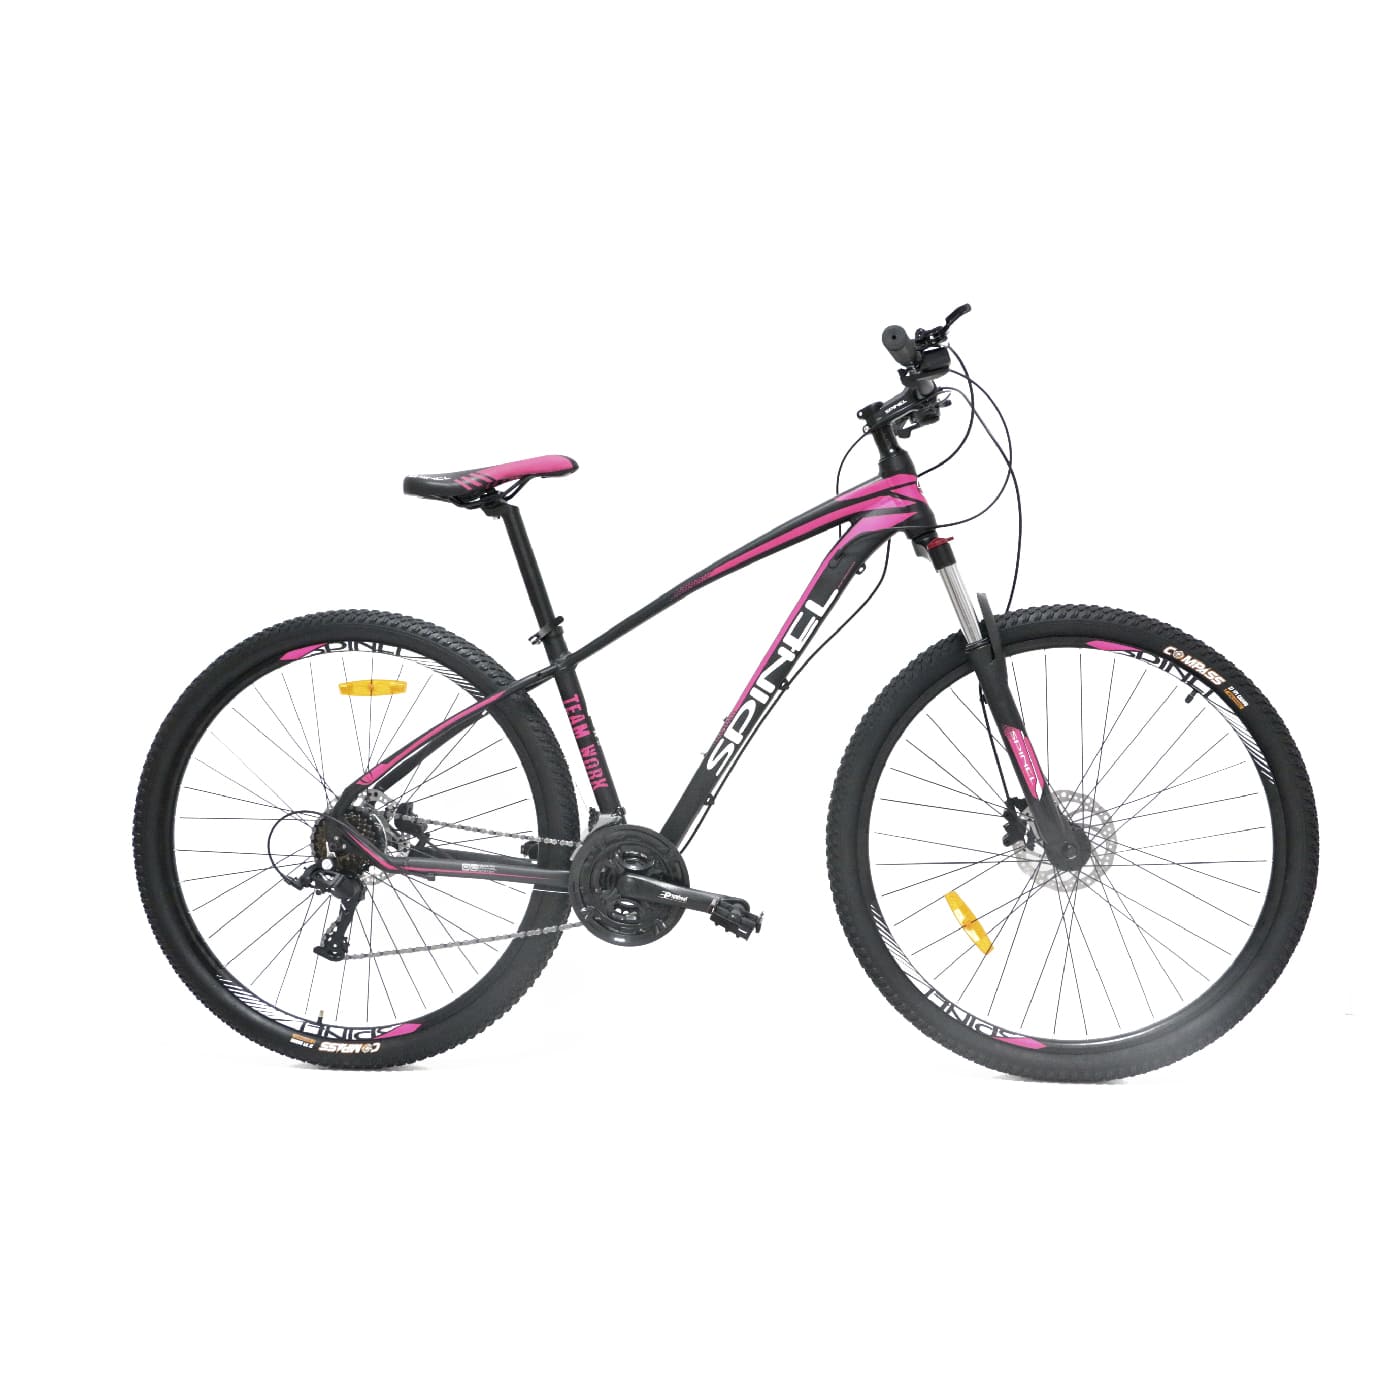 Bicicleta Evezo Spinel 29H / Aluminio 29 Rosado